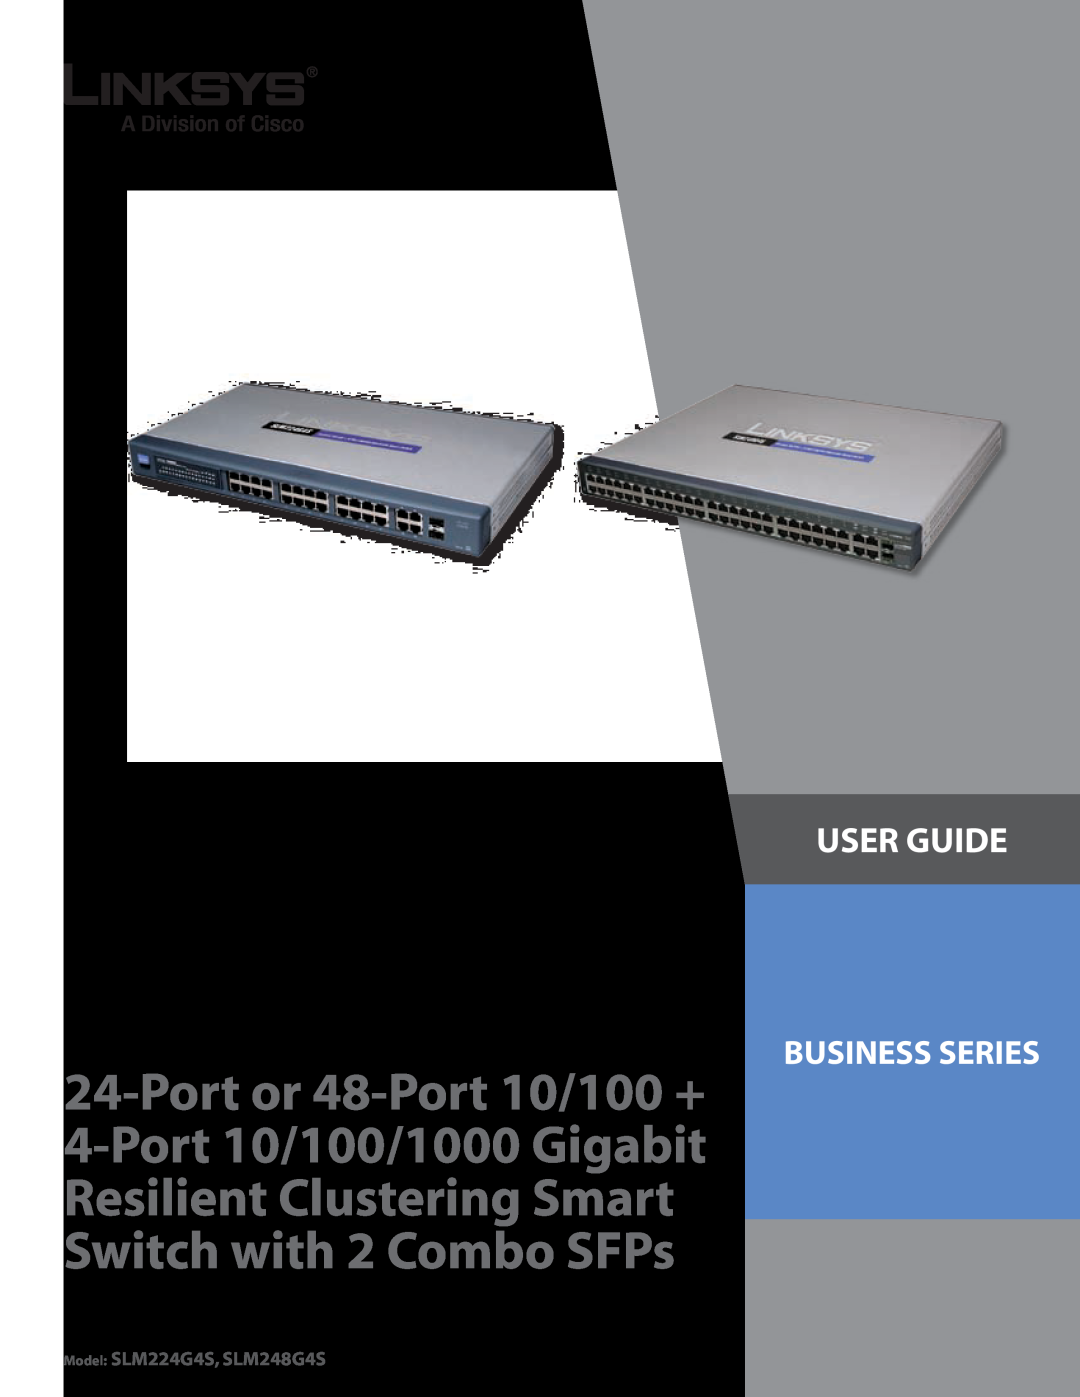 Linksys manual Port or 48-Port 10/100 +, User Guide, Business Series, Model SLM224G4S, SLM248G4S 